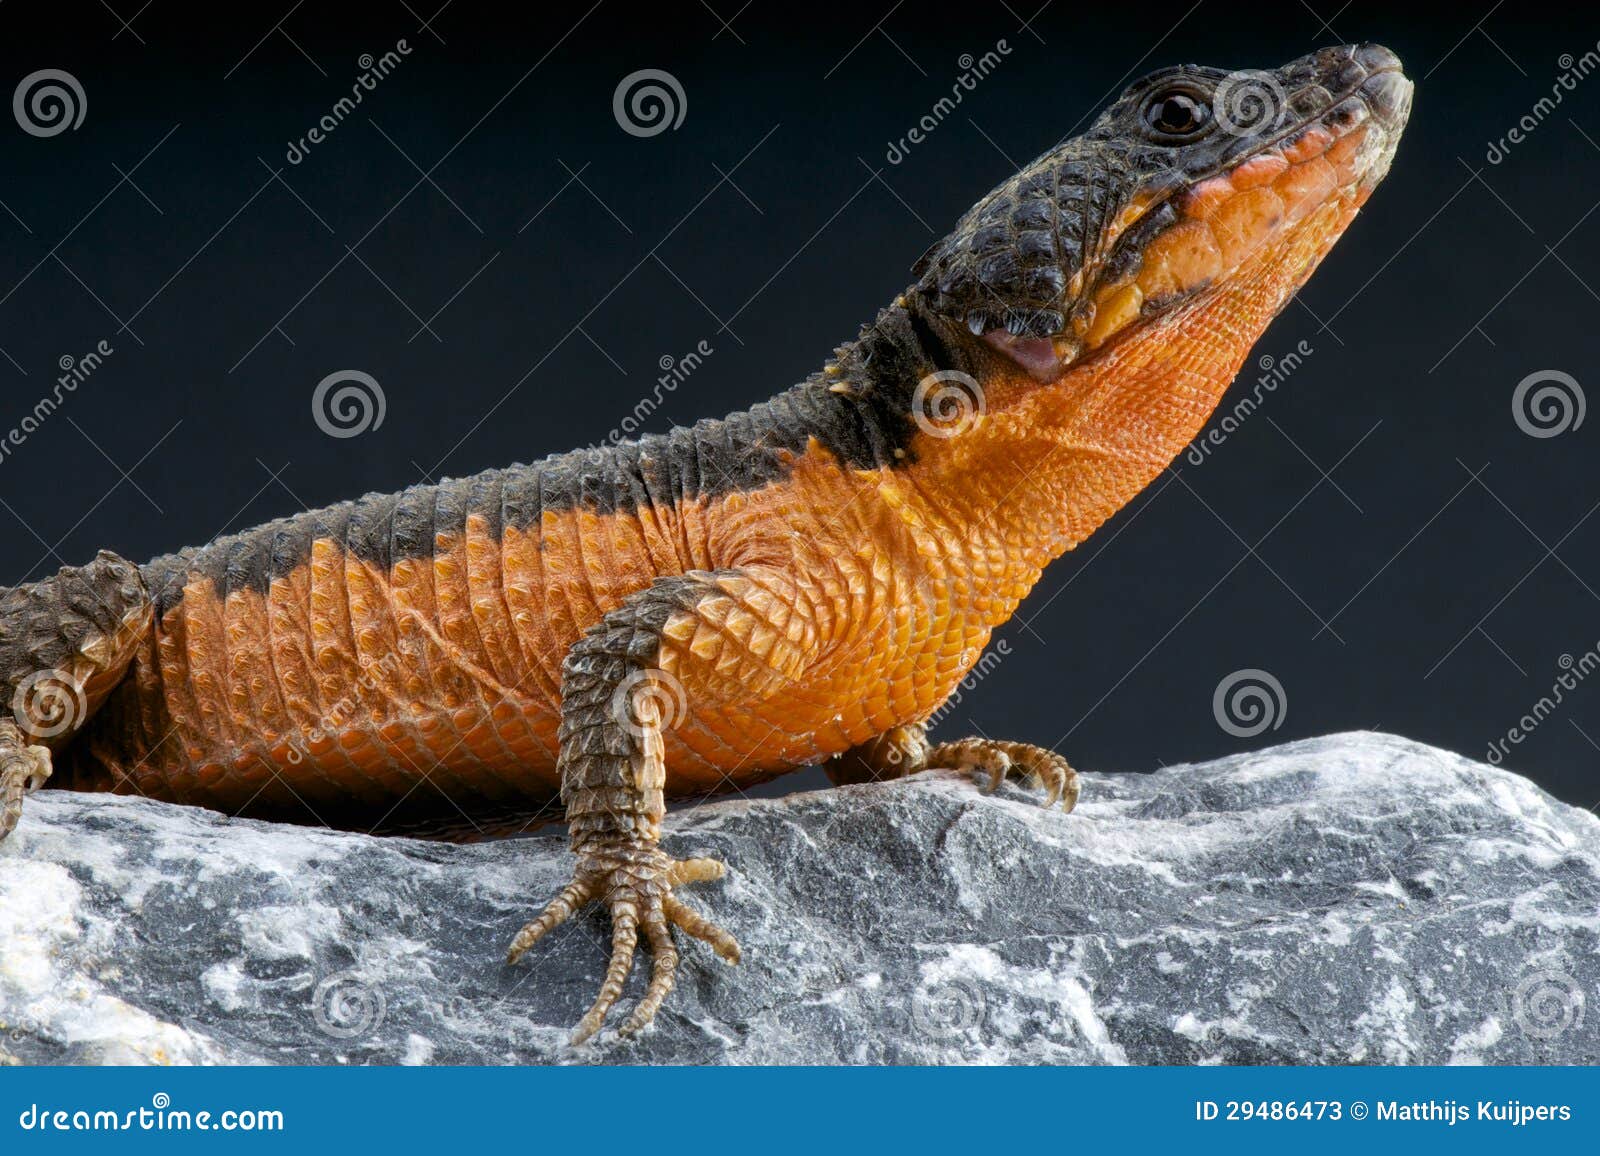 the armadillo lizard